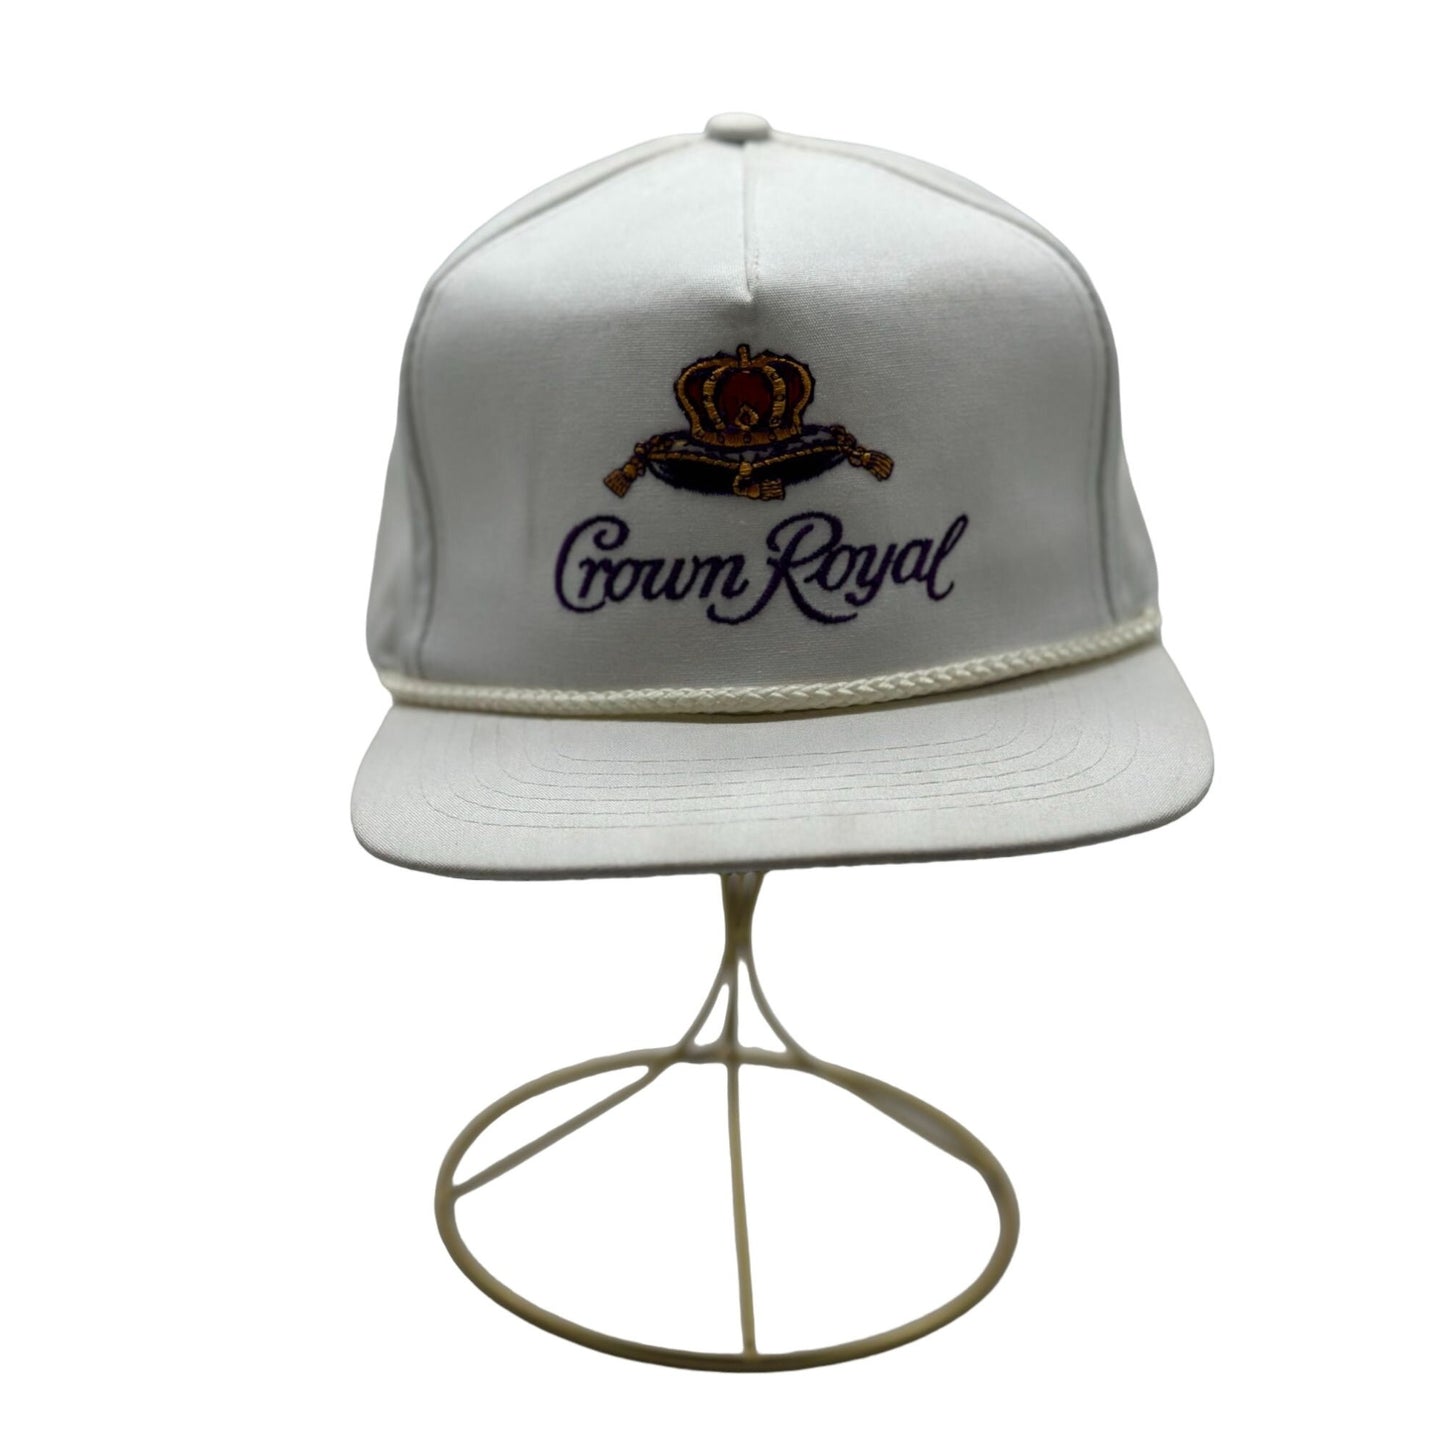 Vintage Yupoong Korea Crown Royal Trucker Hat Cap Snapback White Rope Rare